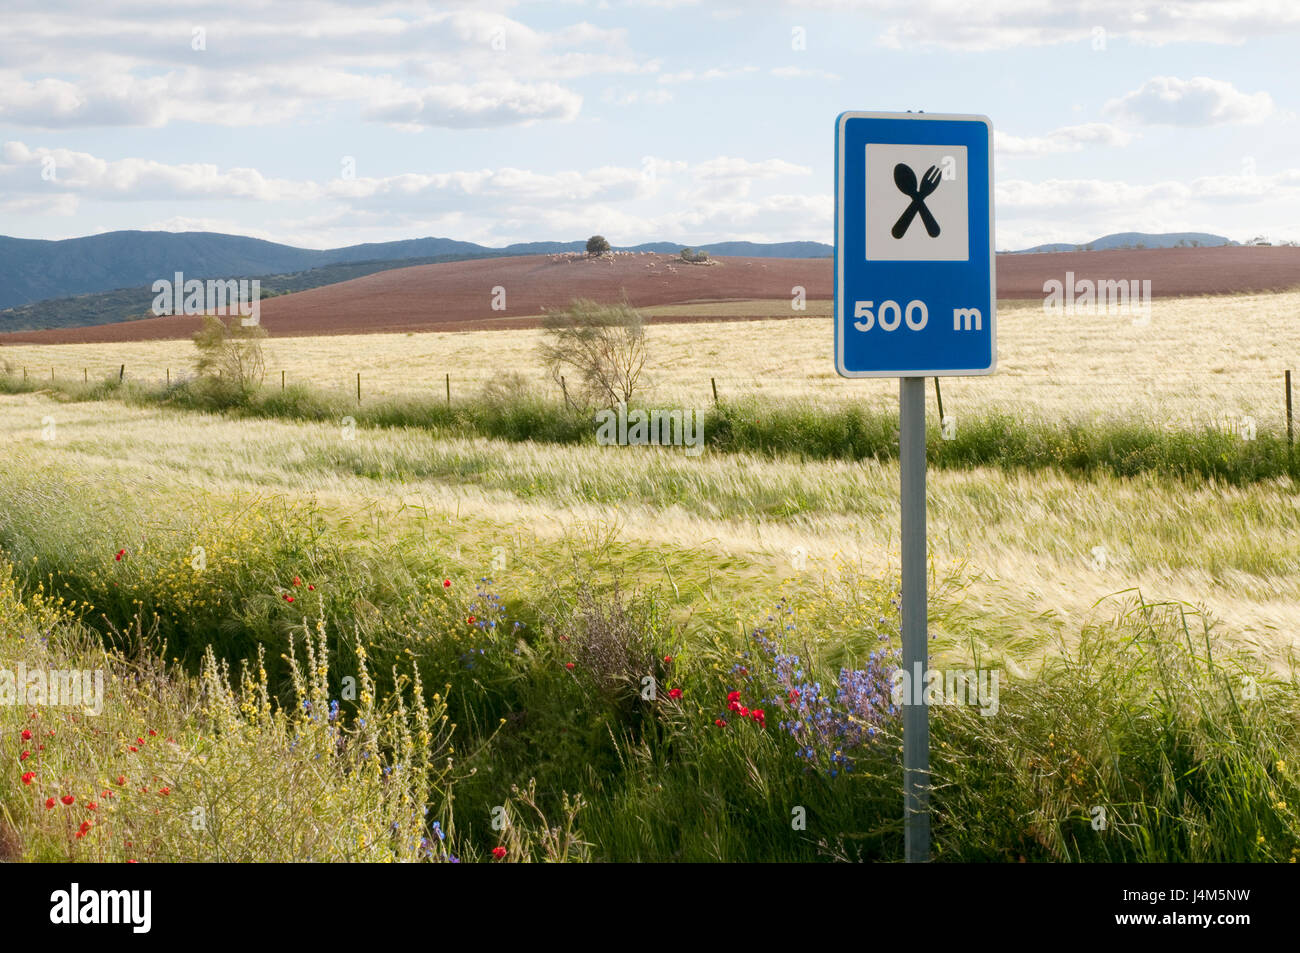 Cultivation field and signpost. Campo de Calatrava, Ciudad Real province, Castilla La Mancha, Spain. Stock Photo